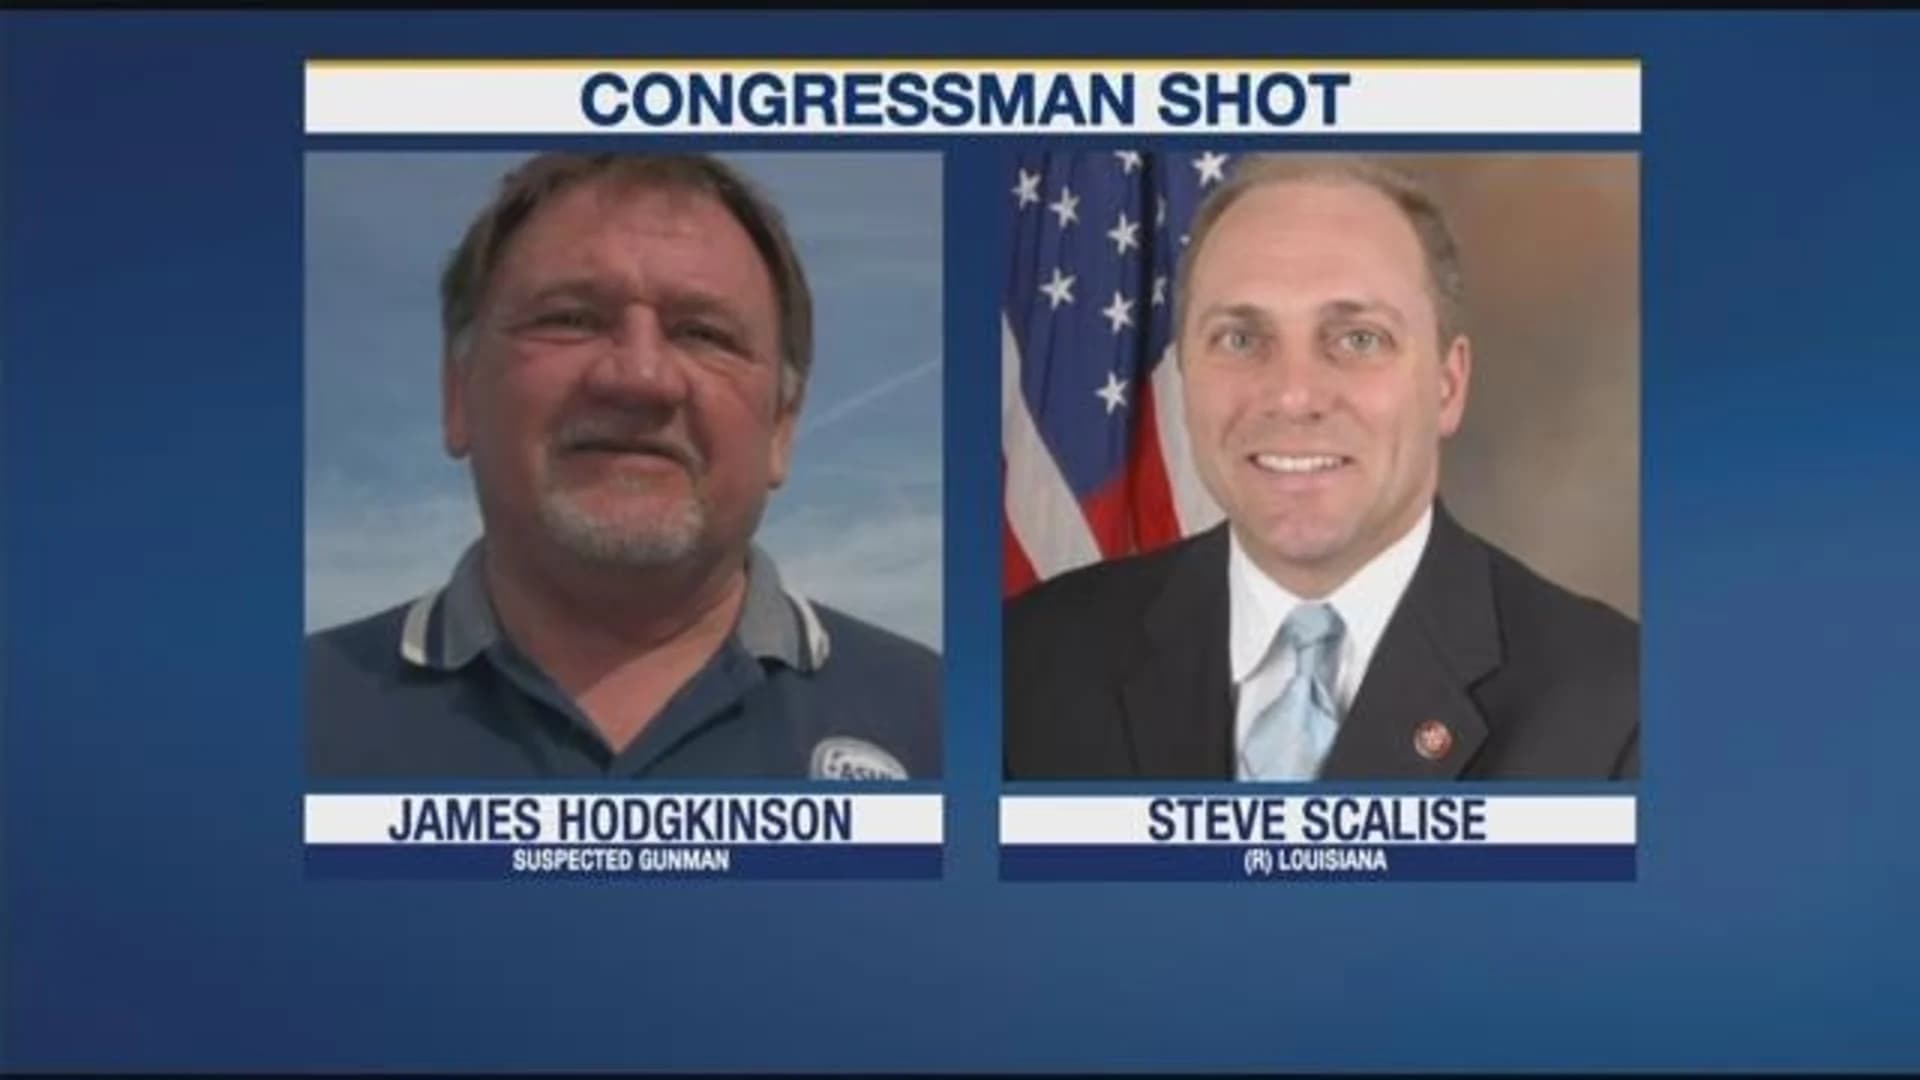 Rifle-wielding gunman wounds lawmaker, then killed by police